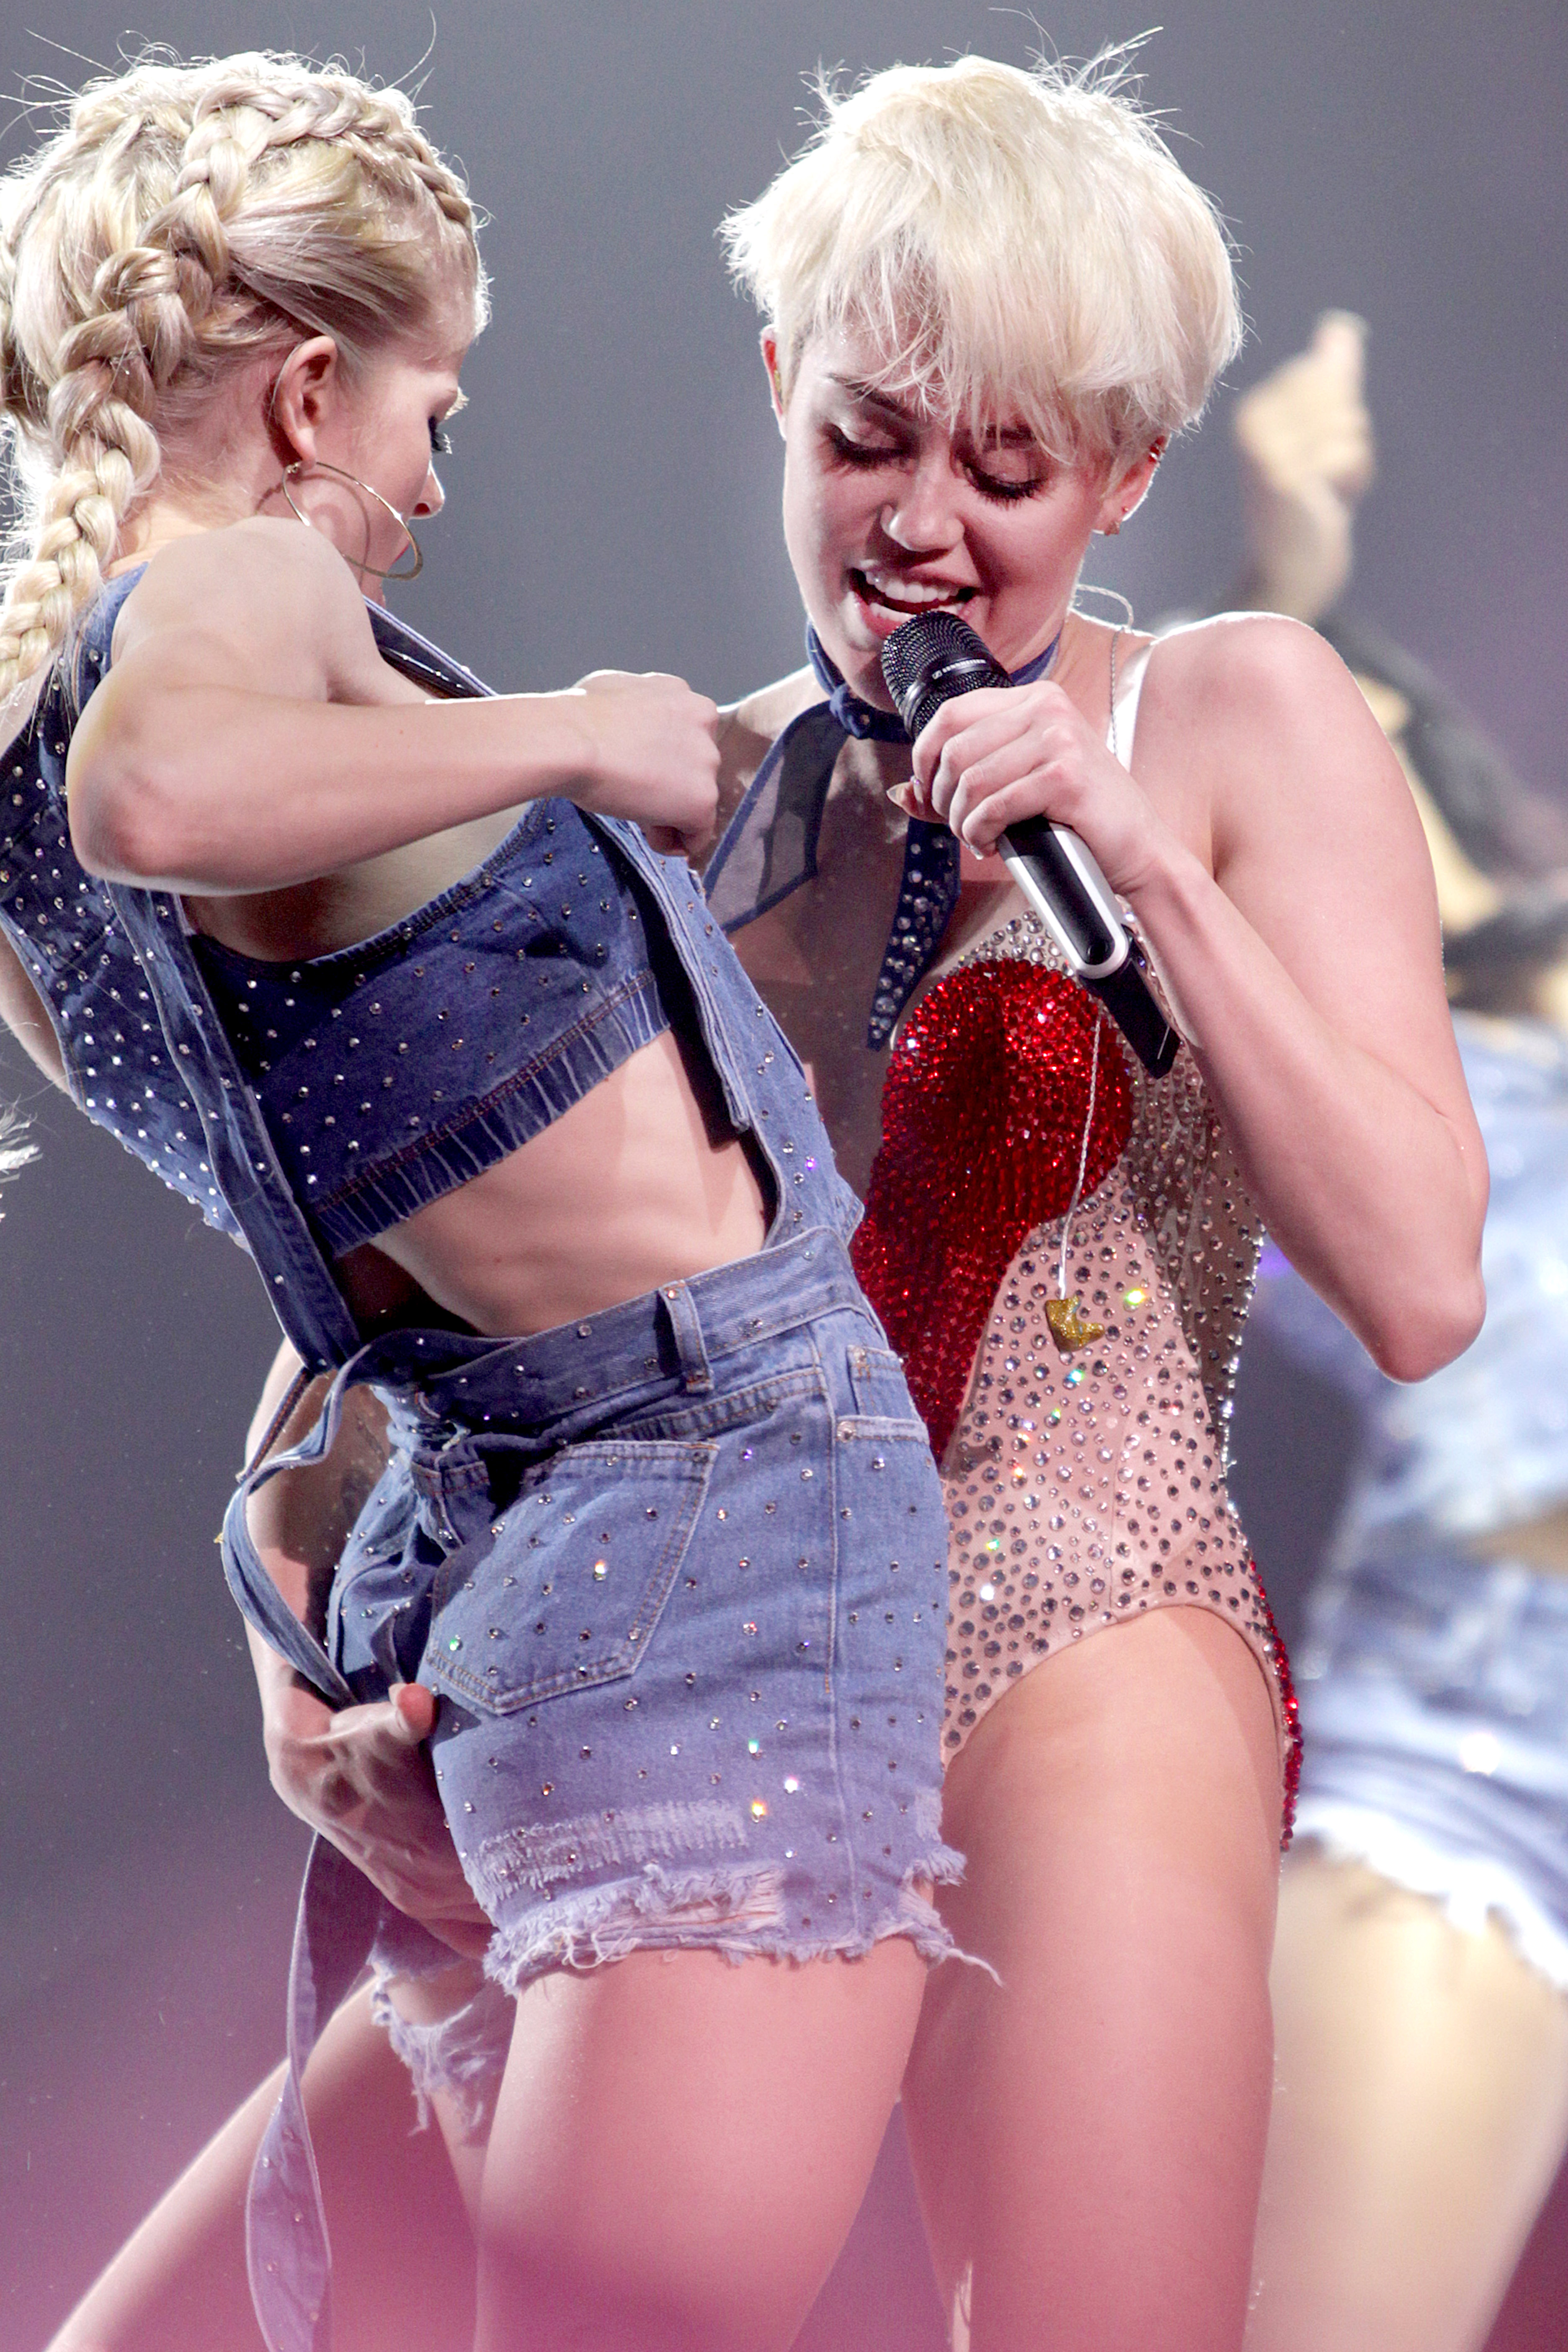 Miley Cyrus loving on a fan.